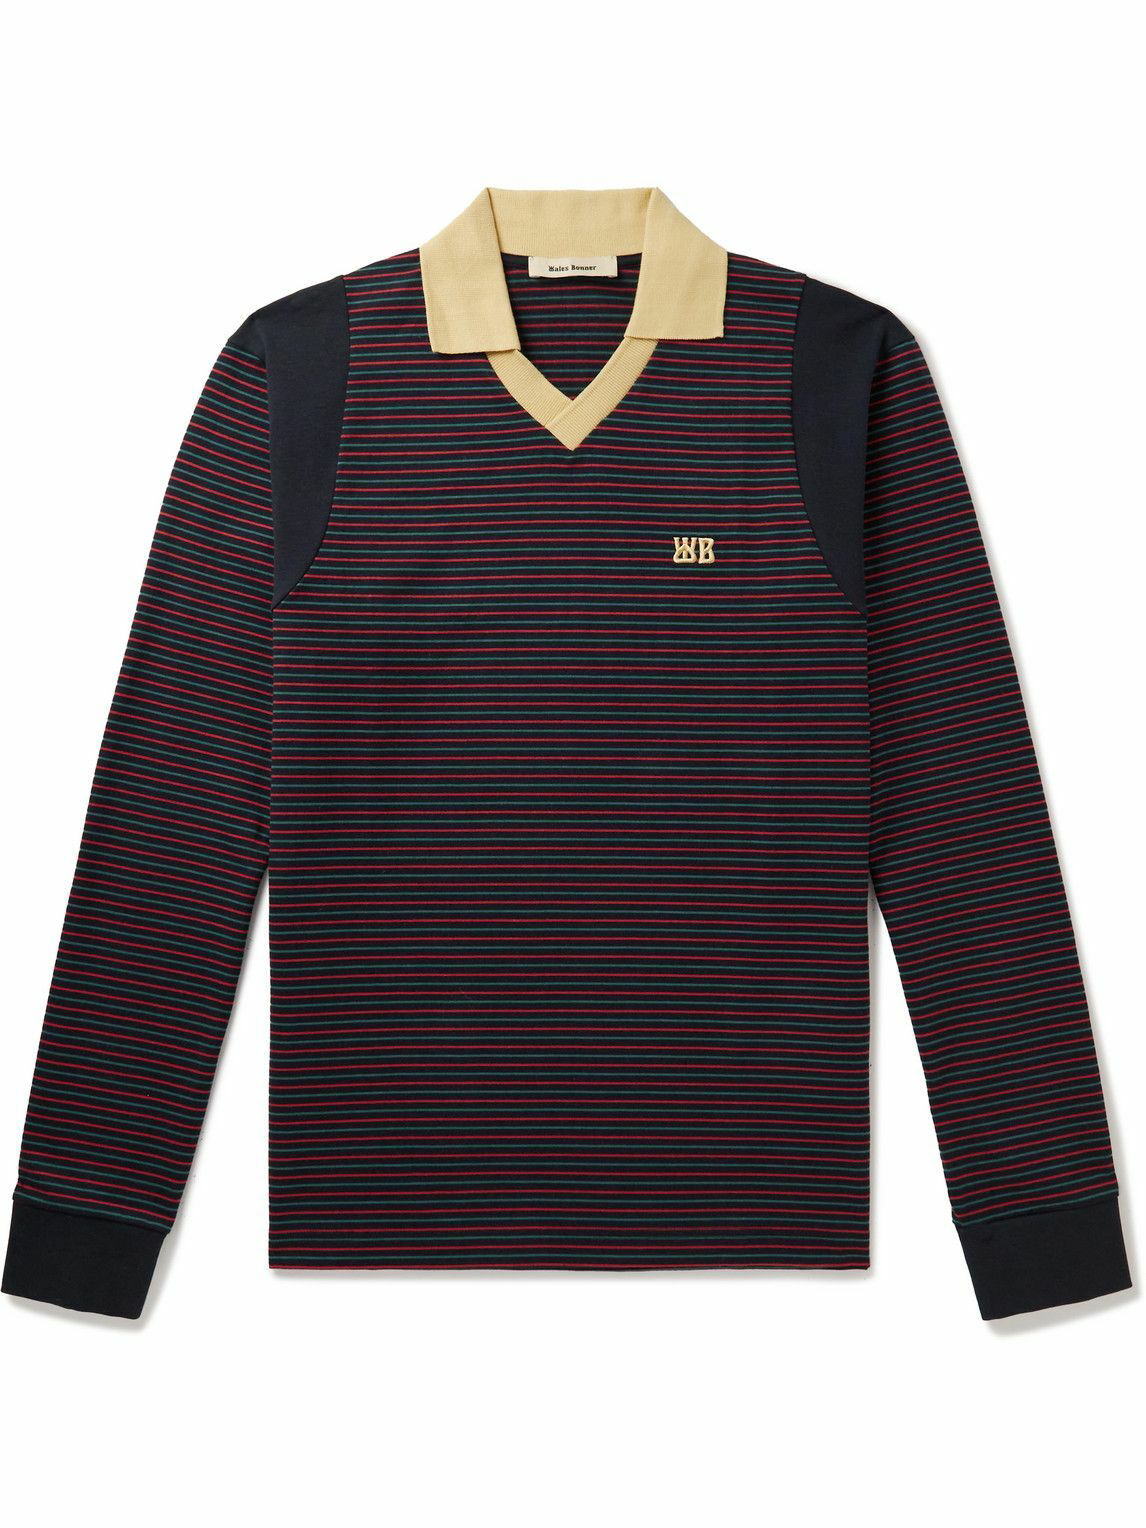 Wales Bonner - Sonic Slim-Fit Striped Cotton-Blend Jersey Polo